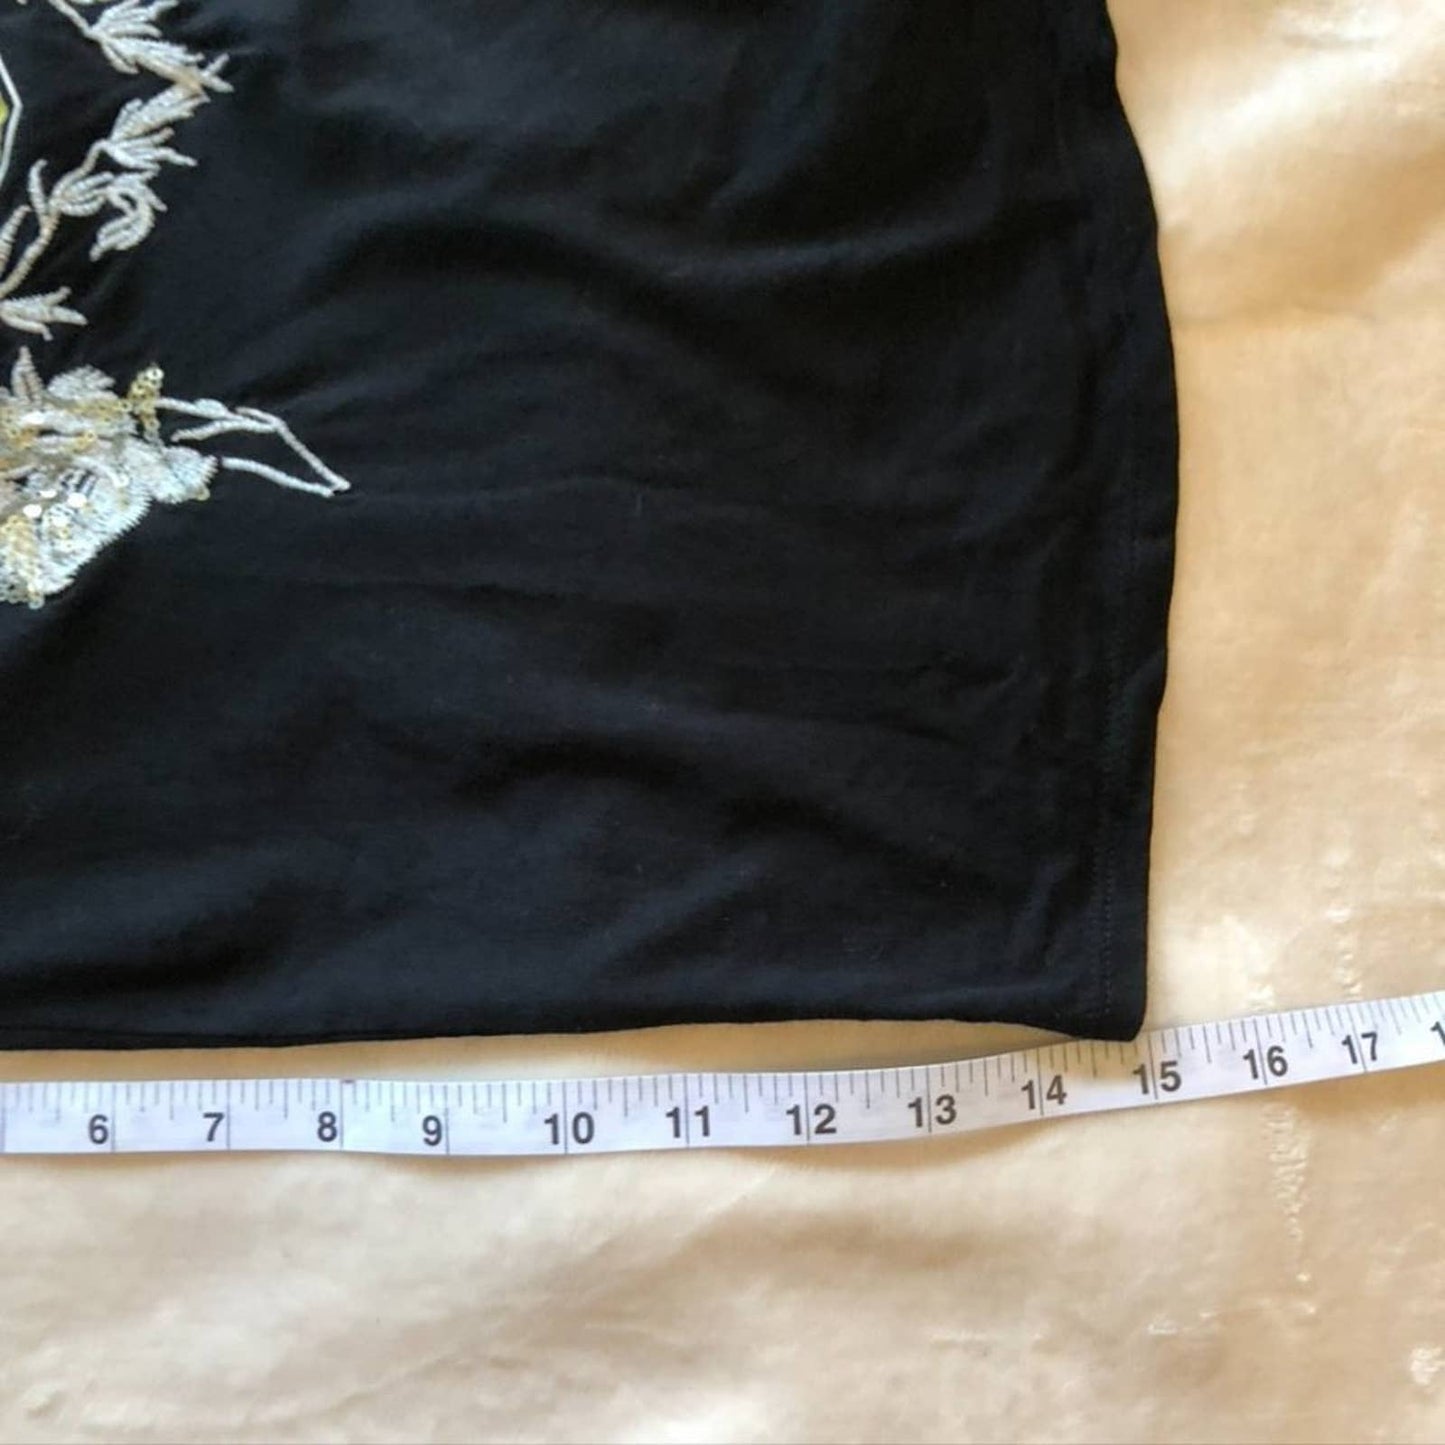 Guess Eco Black Venom T-Shirt - Size SmallMarkita's ClosetGUESS